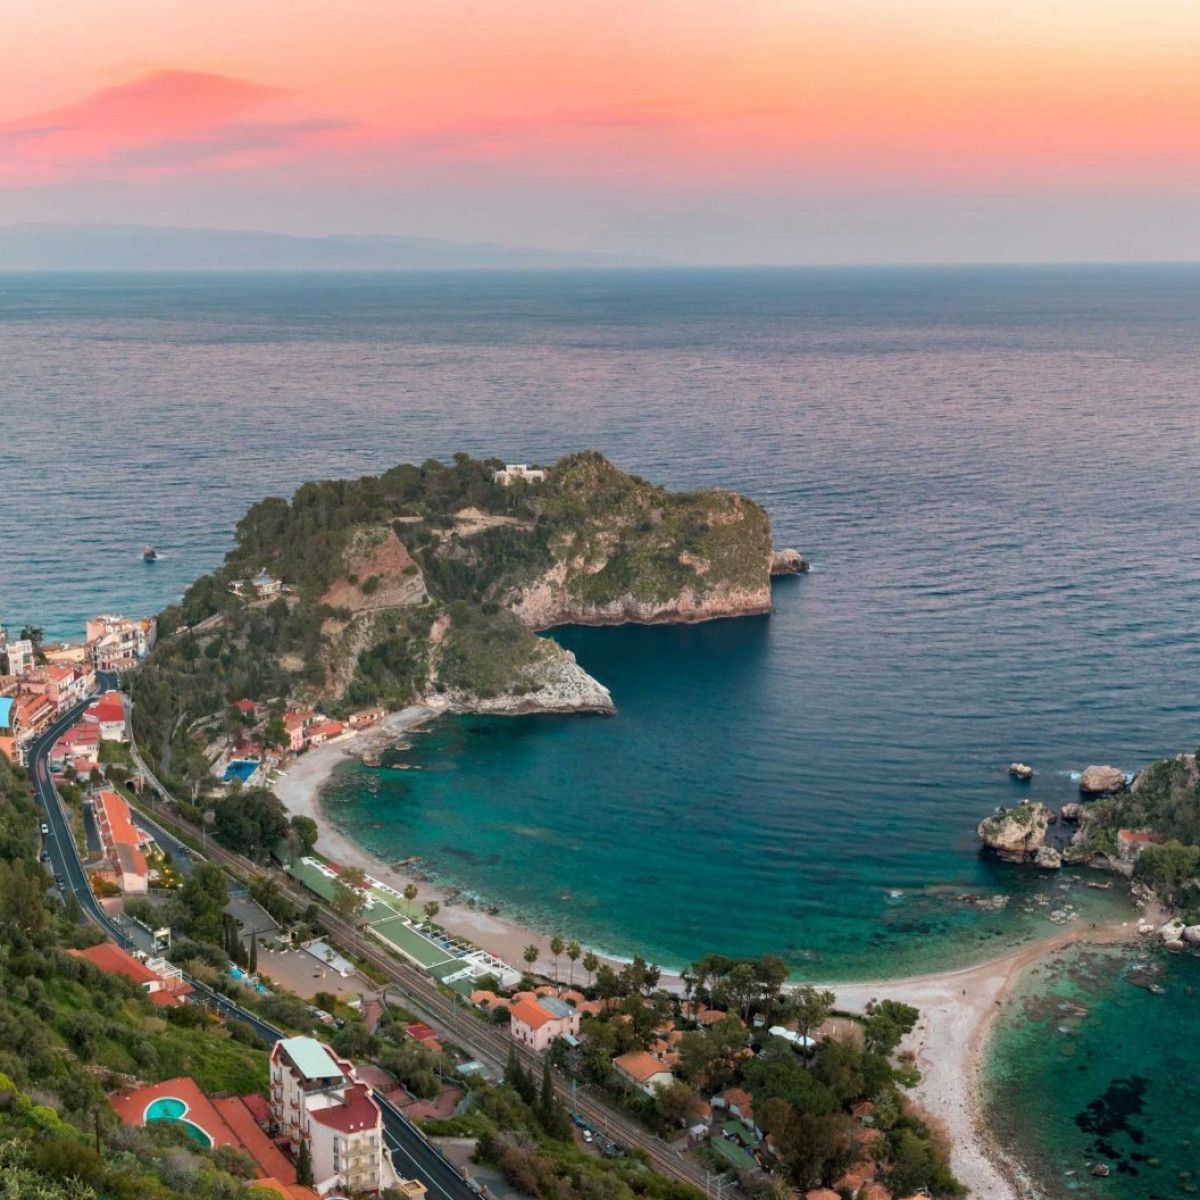 Best Restaurant, Taormina  Bars with Stunning Views in Sicily